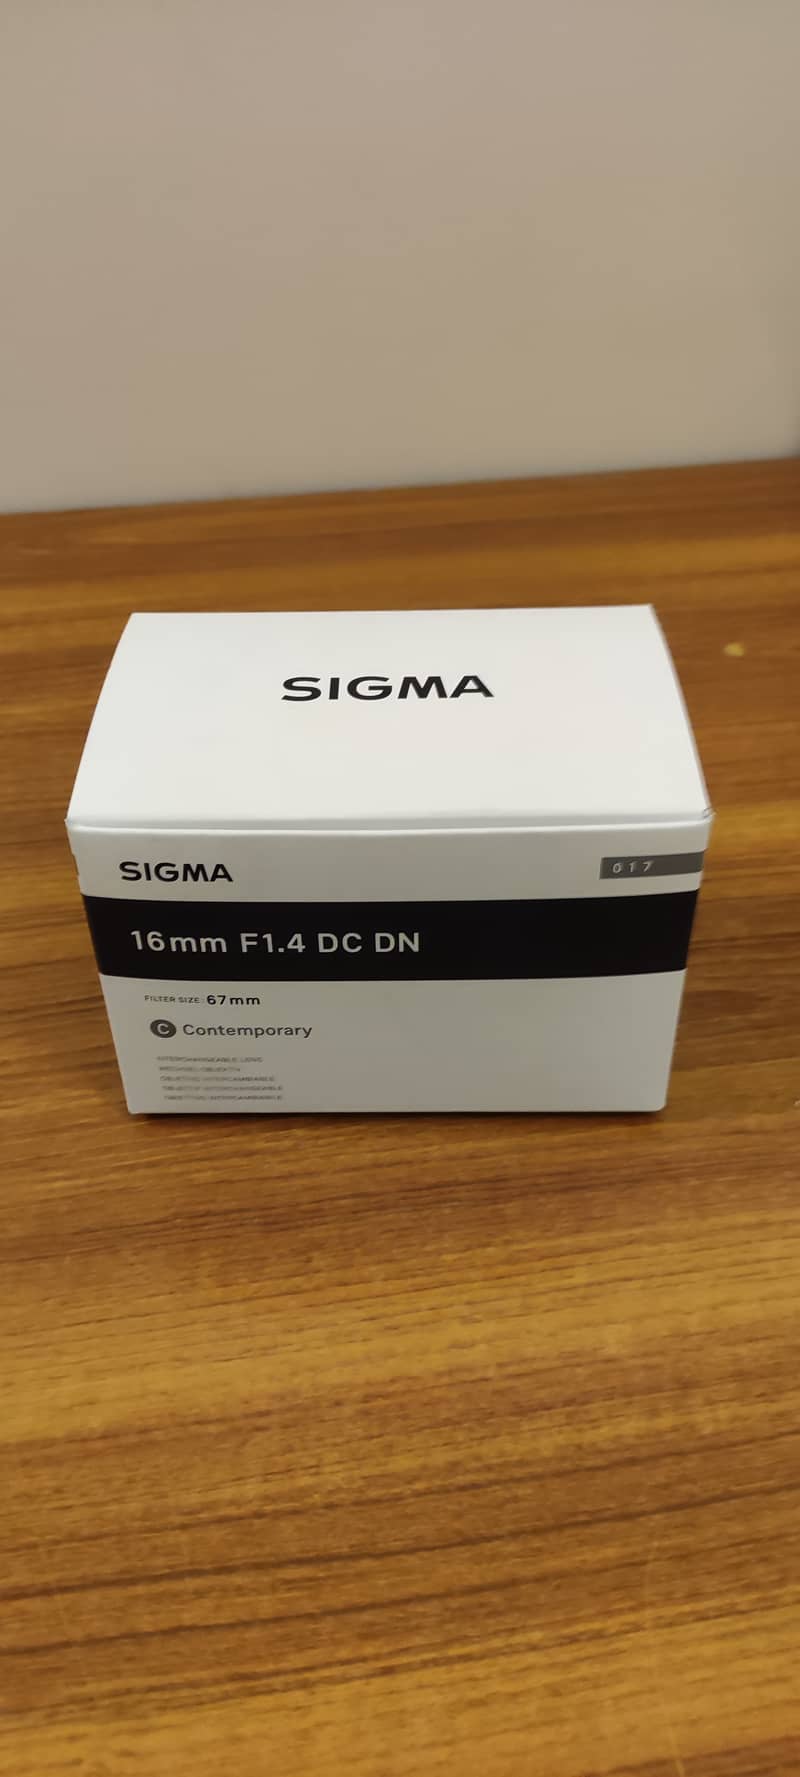 SIGMA 16MM F1.4 DC DN E Mount 0